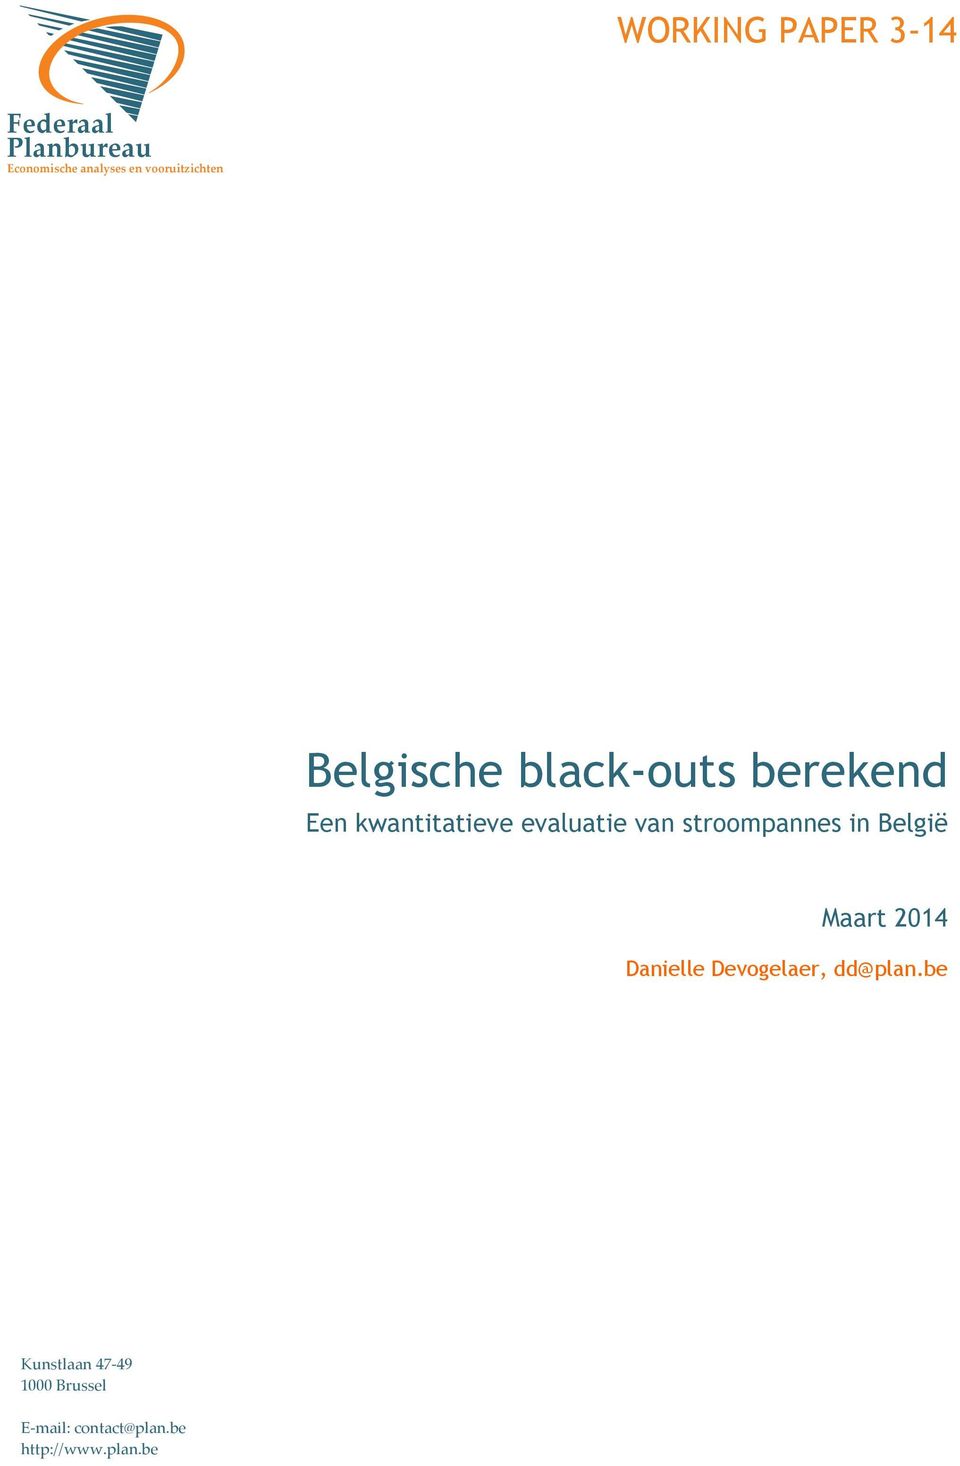 stroompannes in België Maart 2014 Danielle Devogelaer, dd@plan.